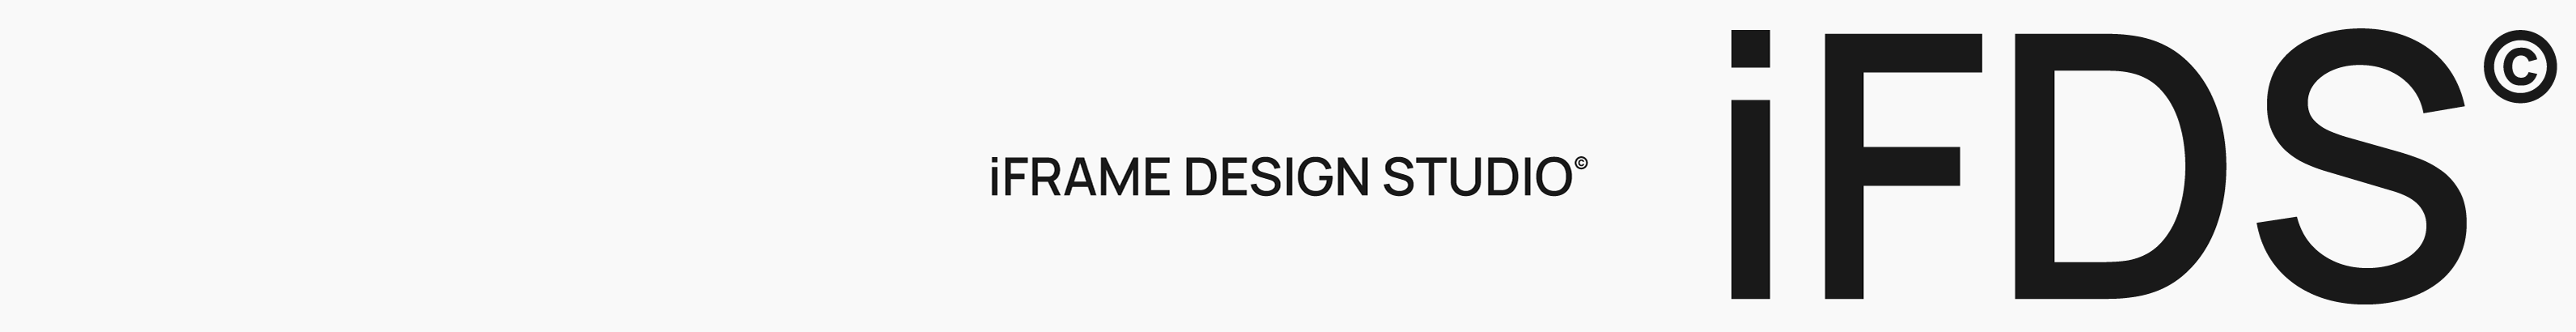 Banner de perfil de iframe design studio